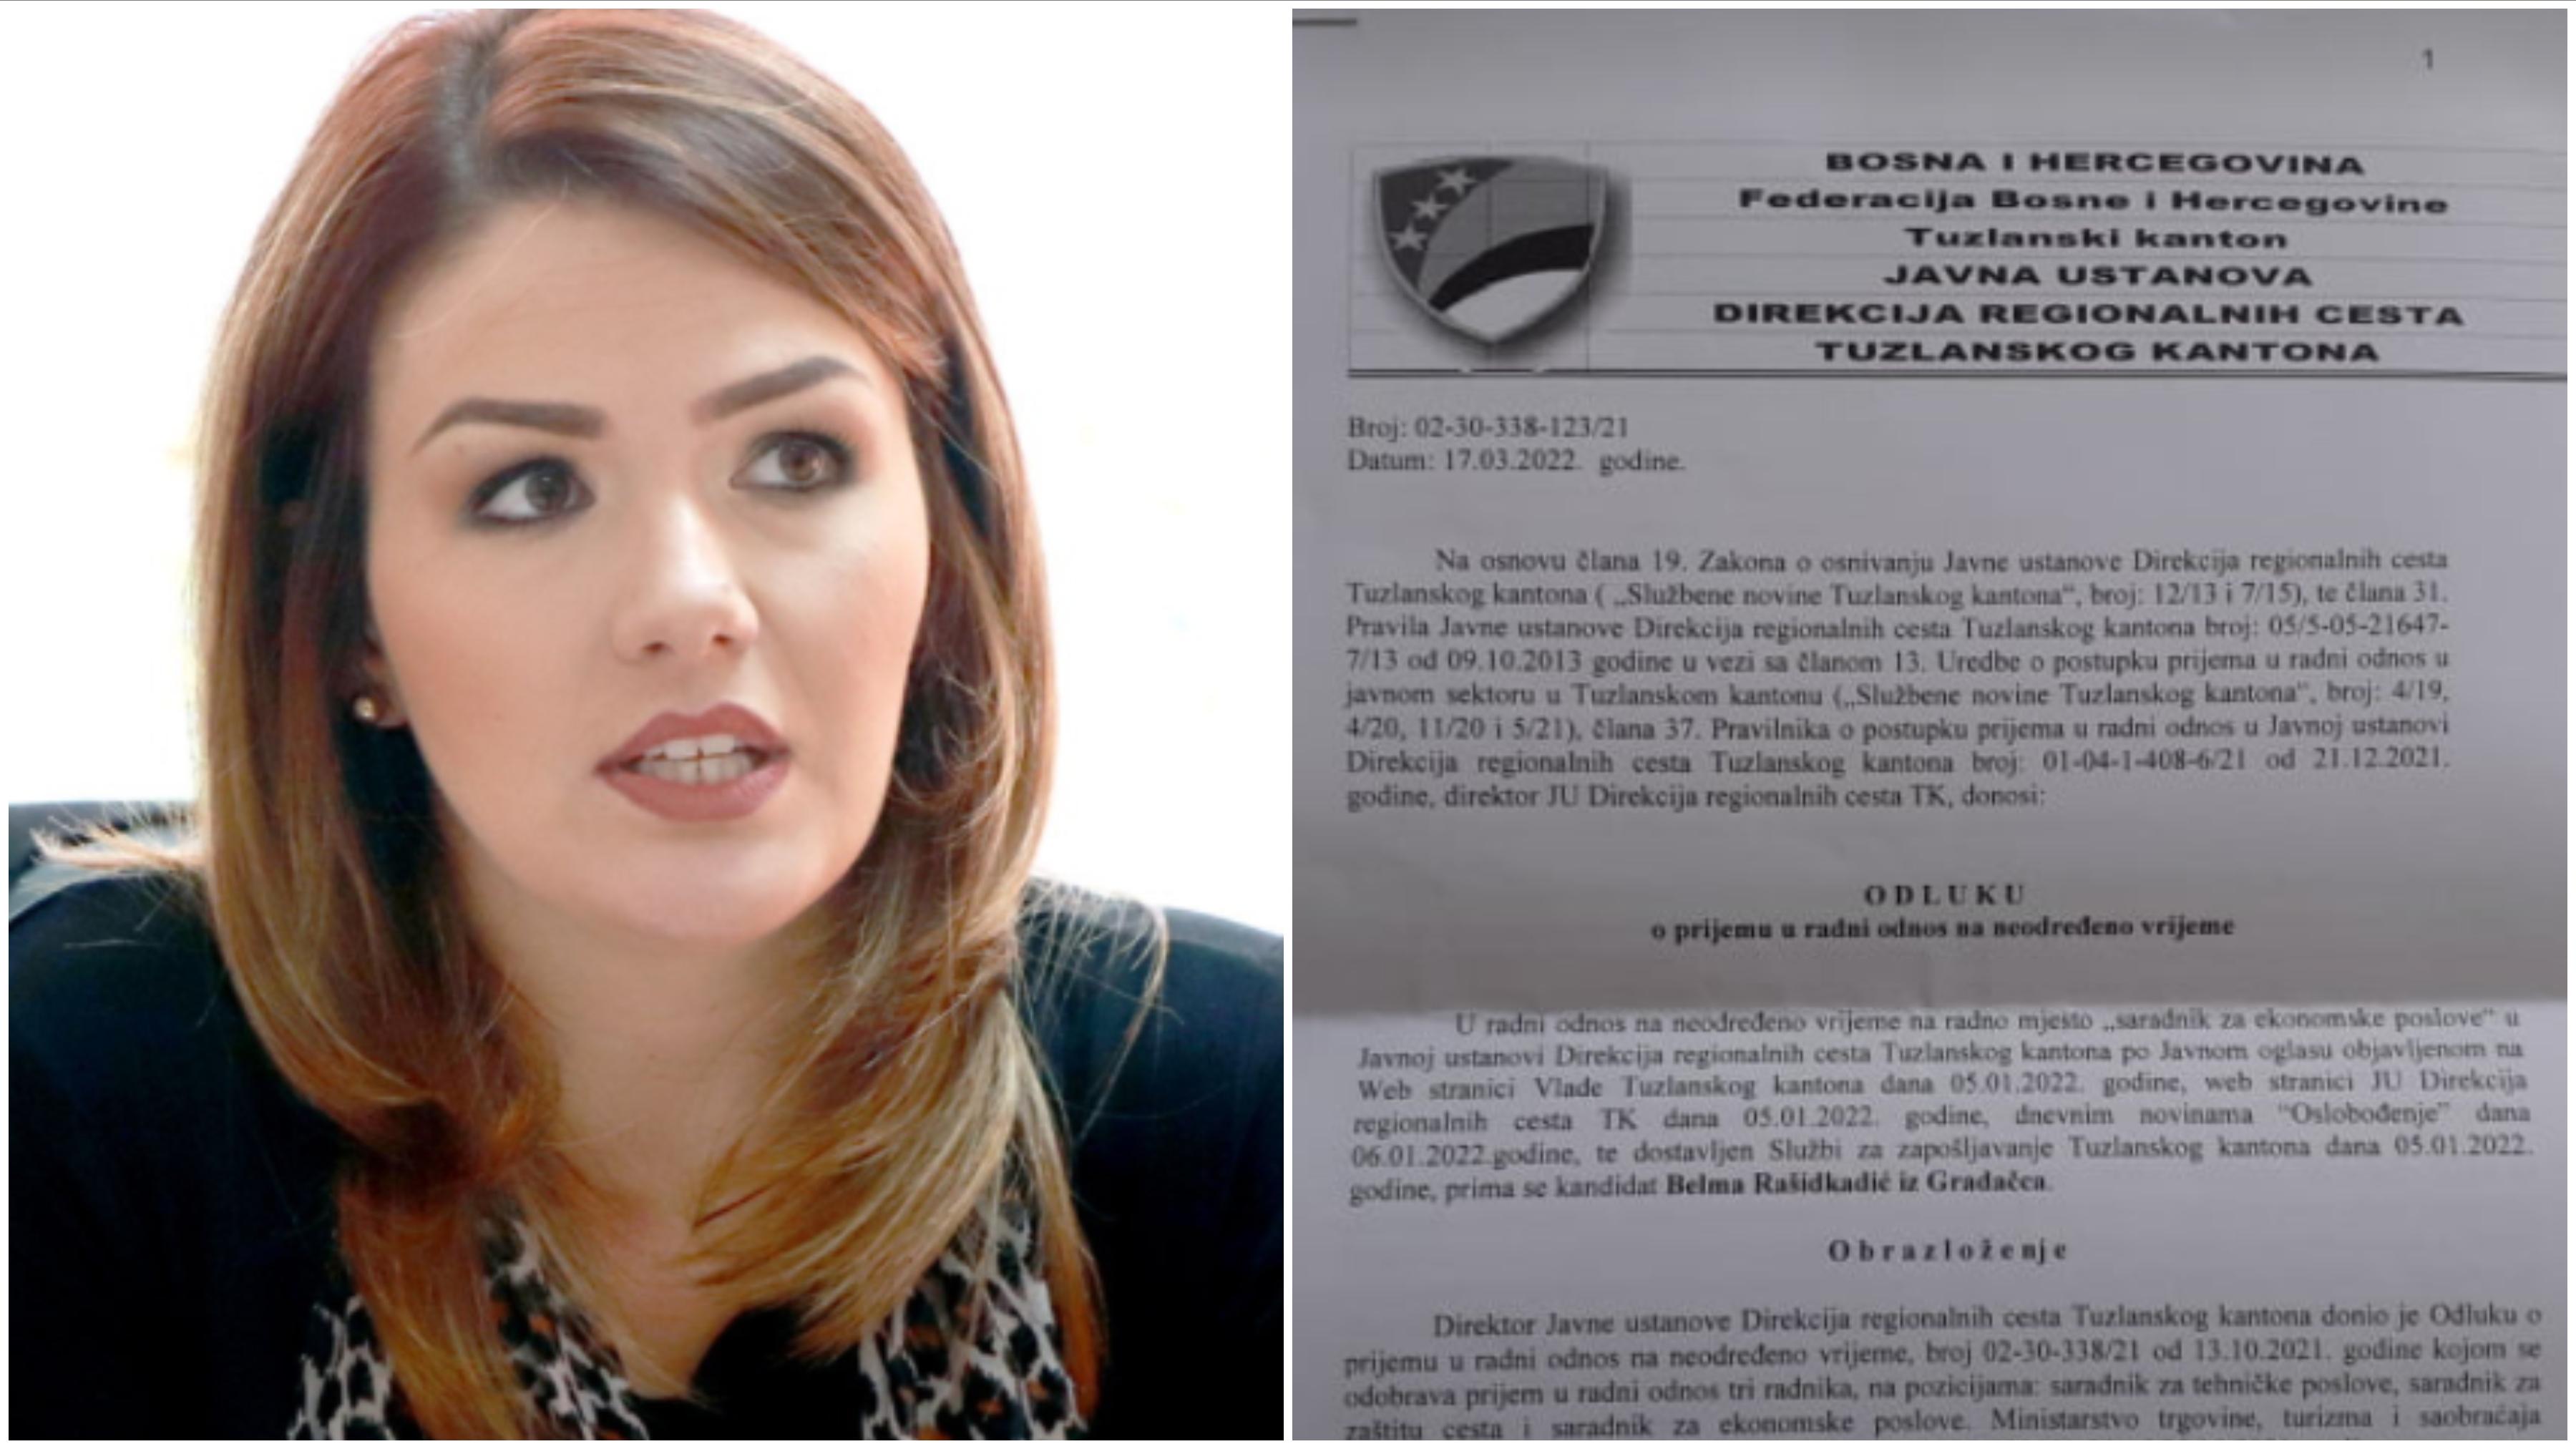 Objavljujemo dokaz: Sestra Lejle Vuković, zastupnice u Skupštini, zaposlena u Direkciju regionalnih cesta TK